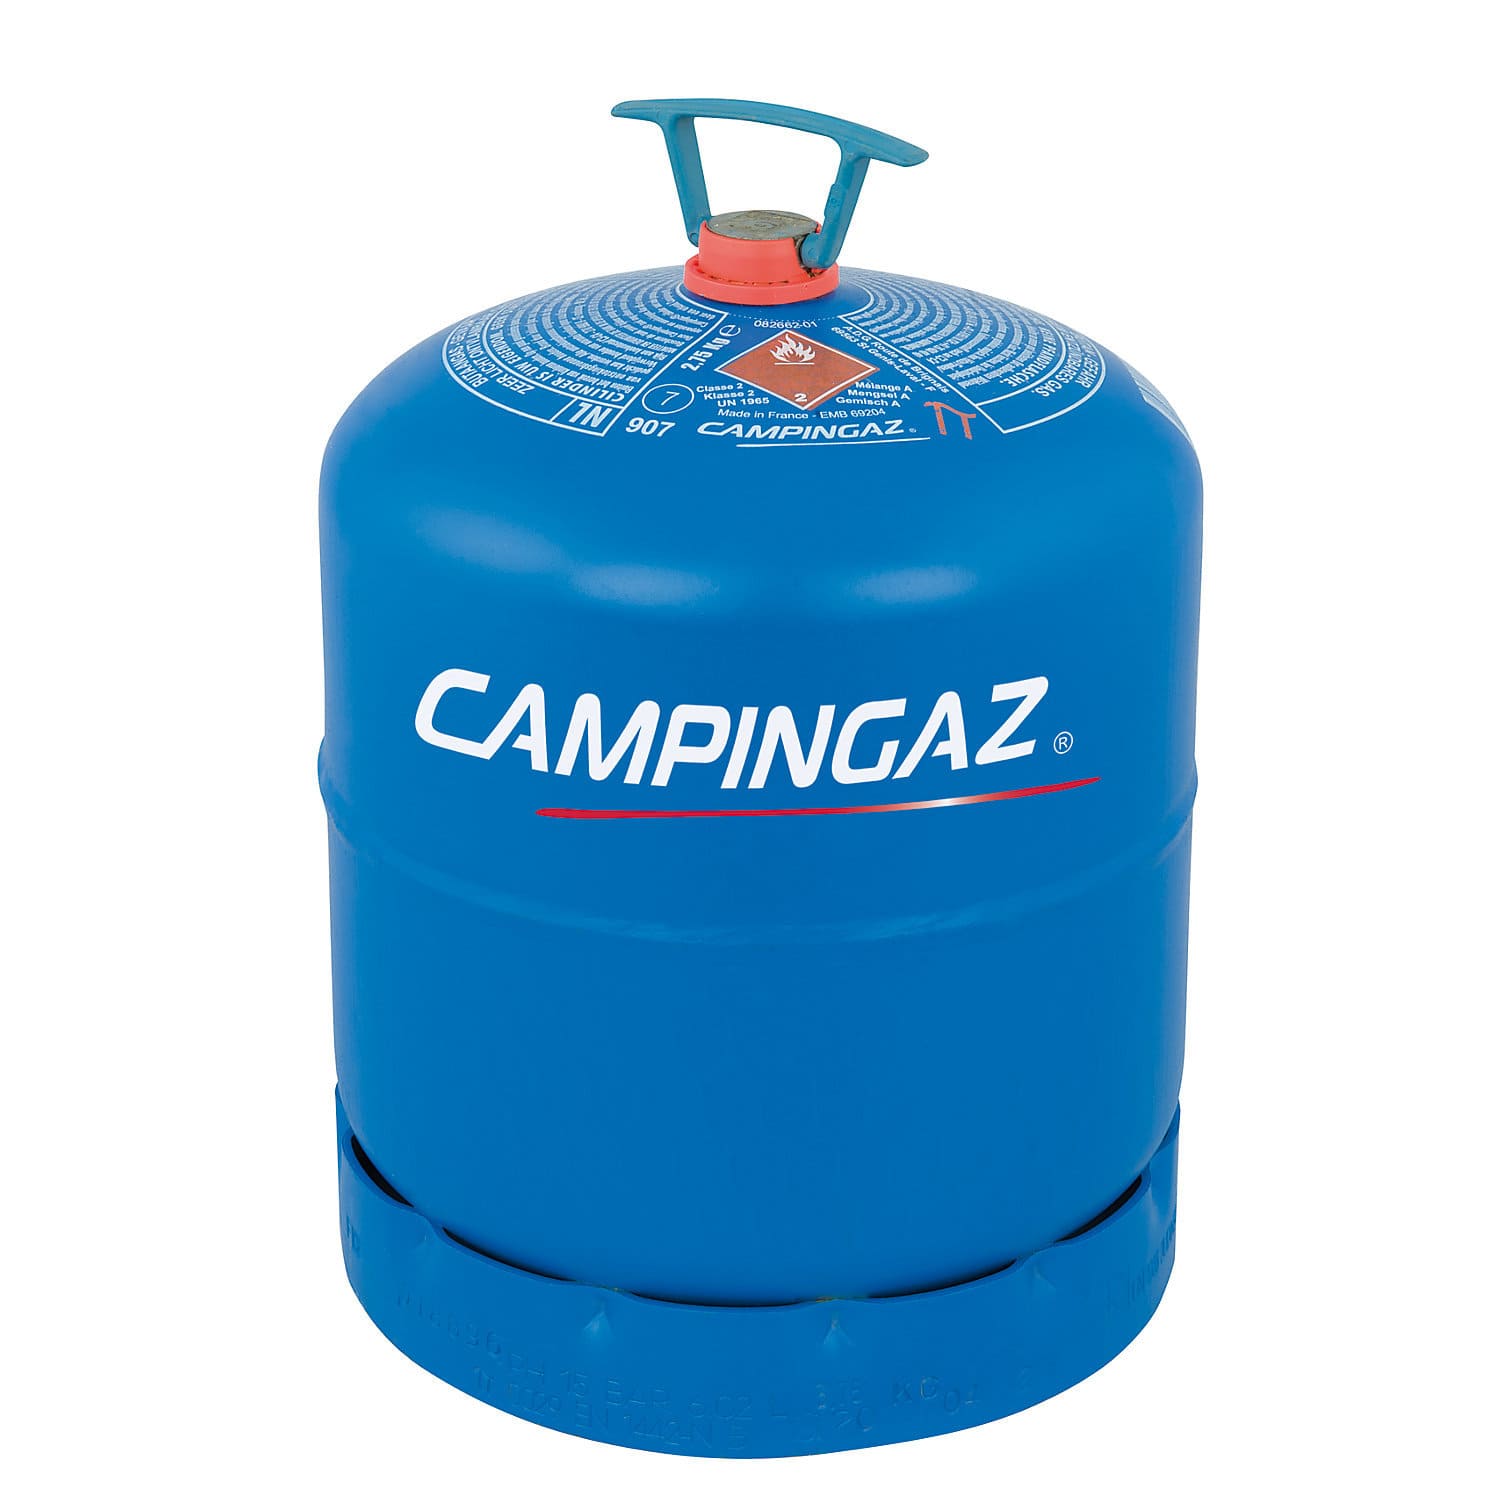 Campingas R 907 Depot Gasflasche (2.75kg)